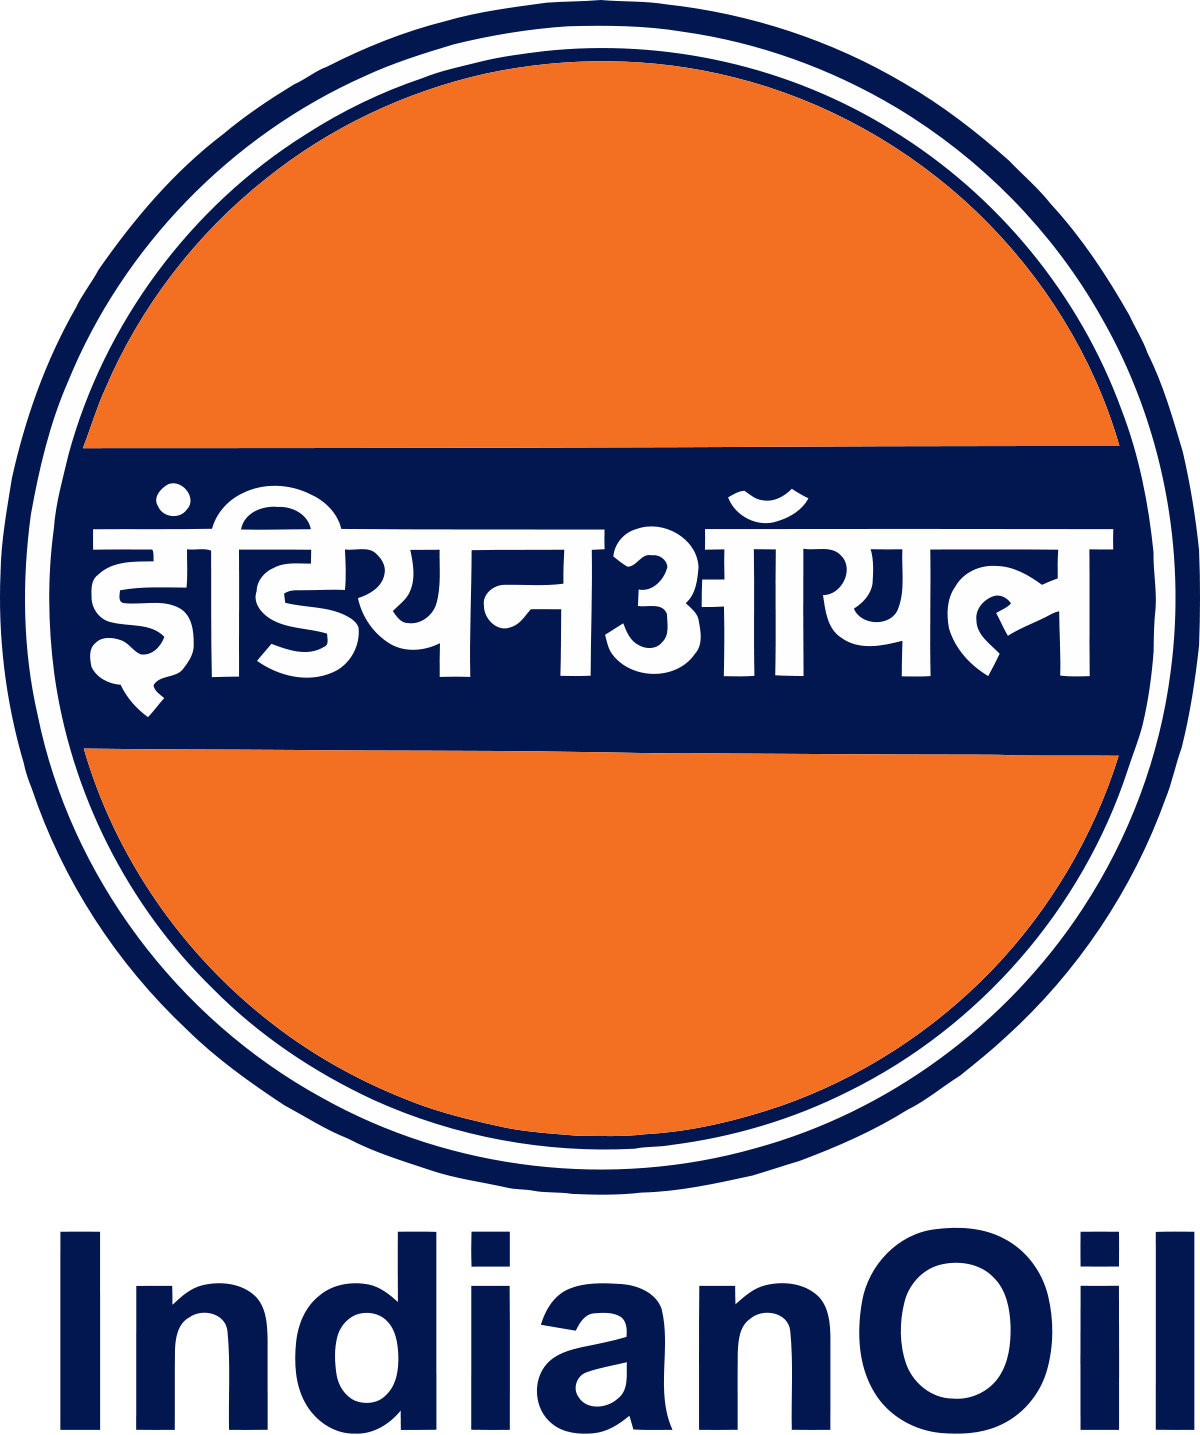 Oil Co Logo - Indian Oil Corporation